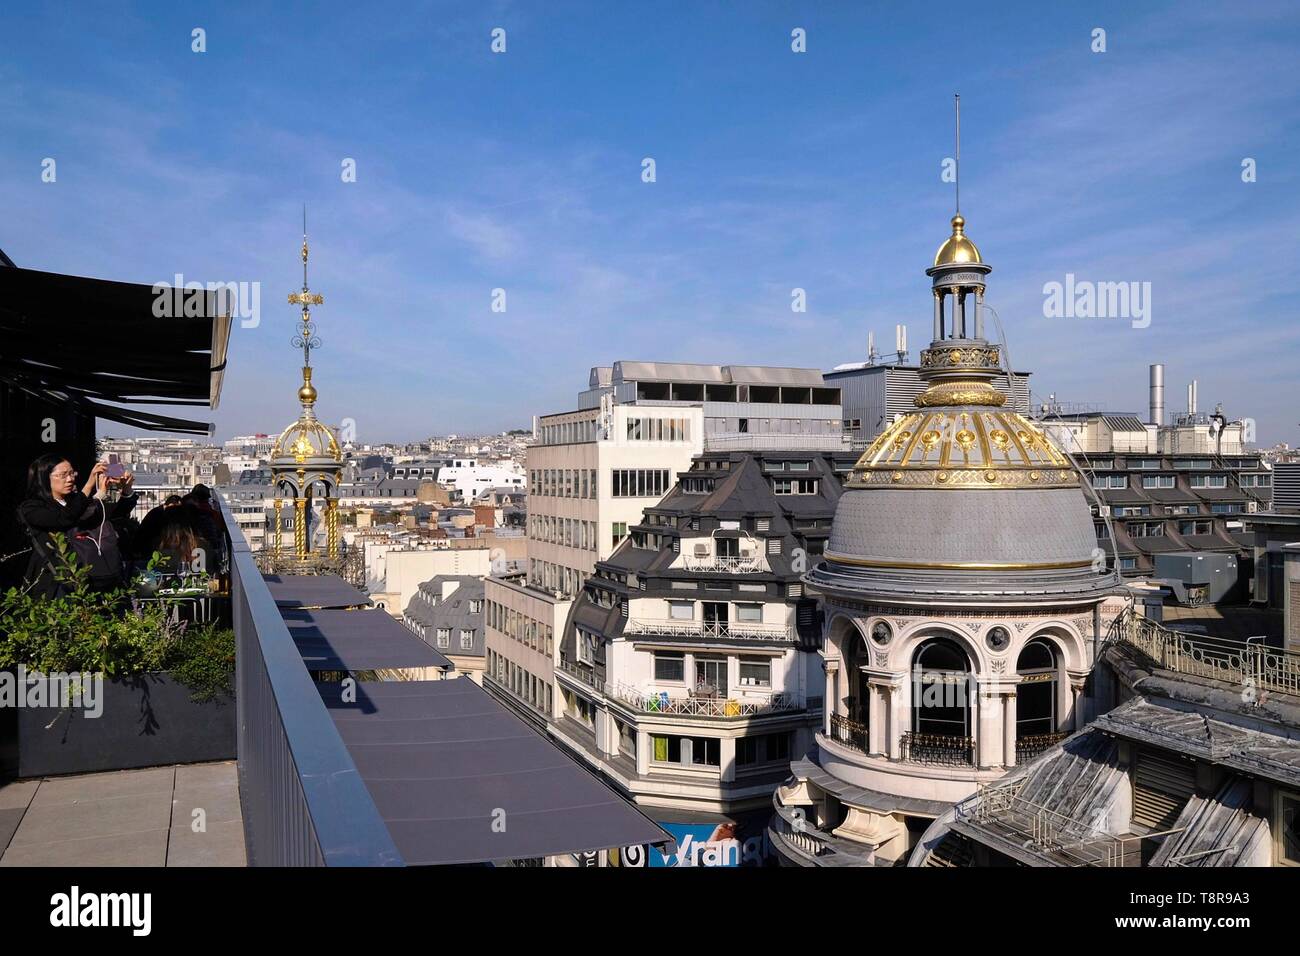 France, Paris, Boulevard Haussman, Restaurant terrace and the gilded dome of the department store Le Printemps Haussmann Stock Photo